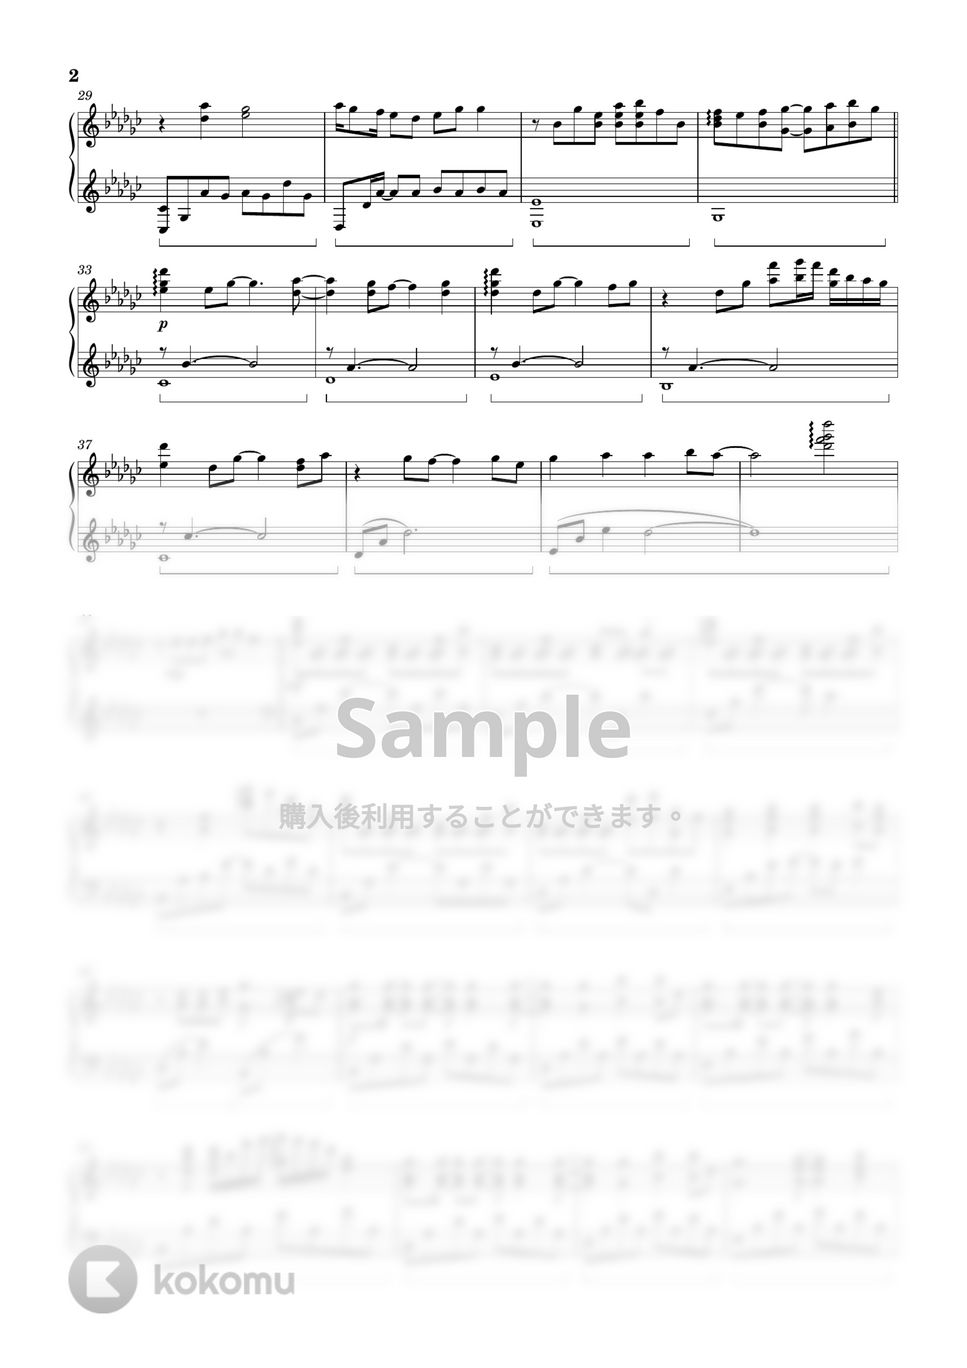 PRODUCE 101 JAPAN SEASON2 - Let Me Fly (Piano Version) by ちゃんRINA。